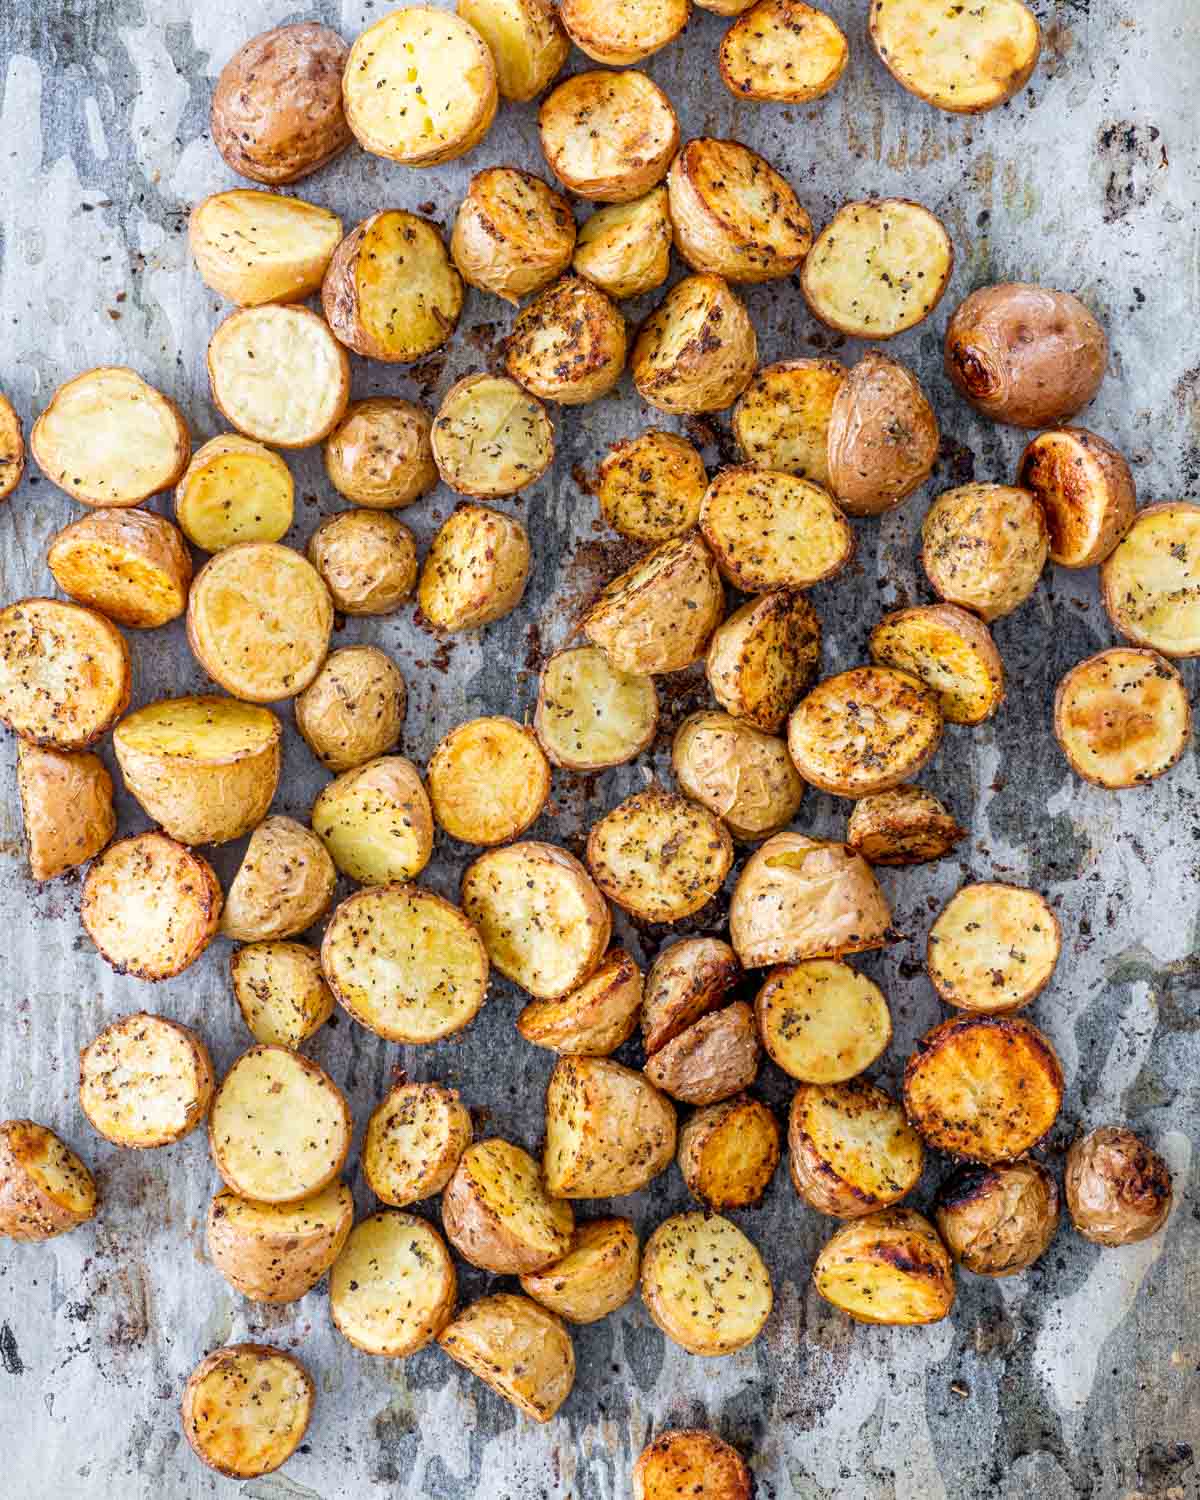 roasted baby potatoes on a baking sheet.